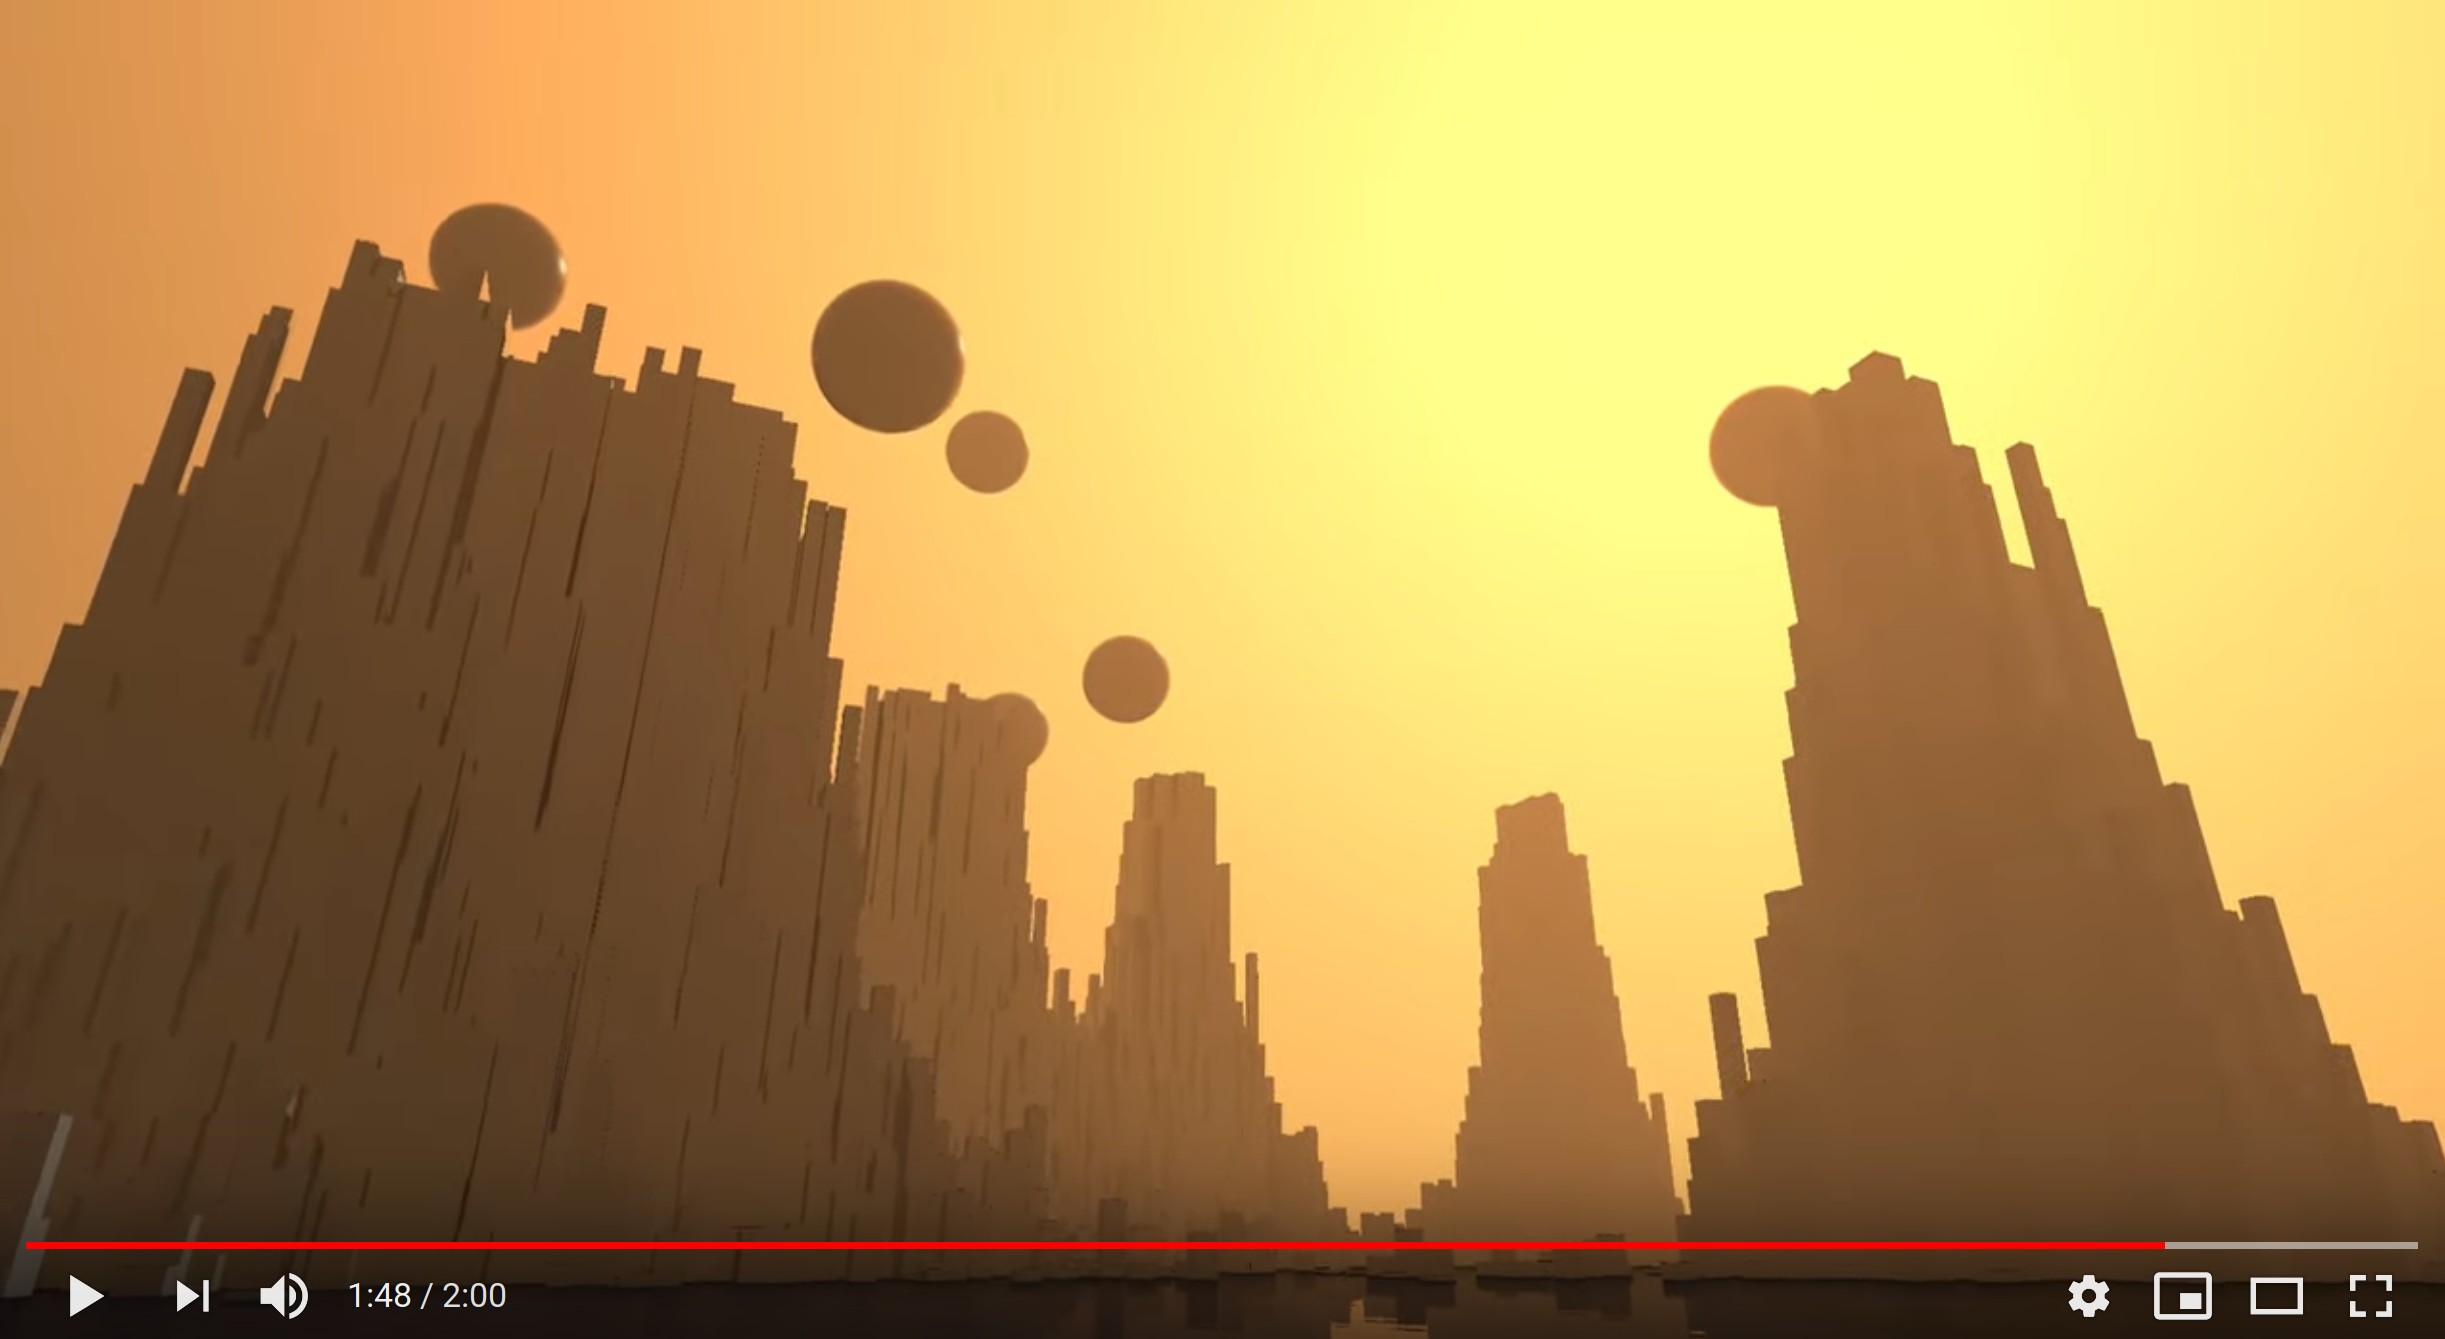 Youtube preview: mountains & spheres